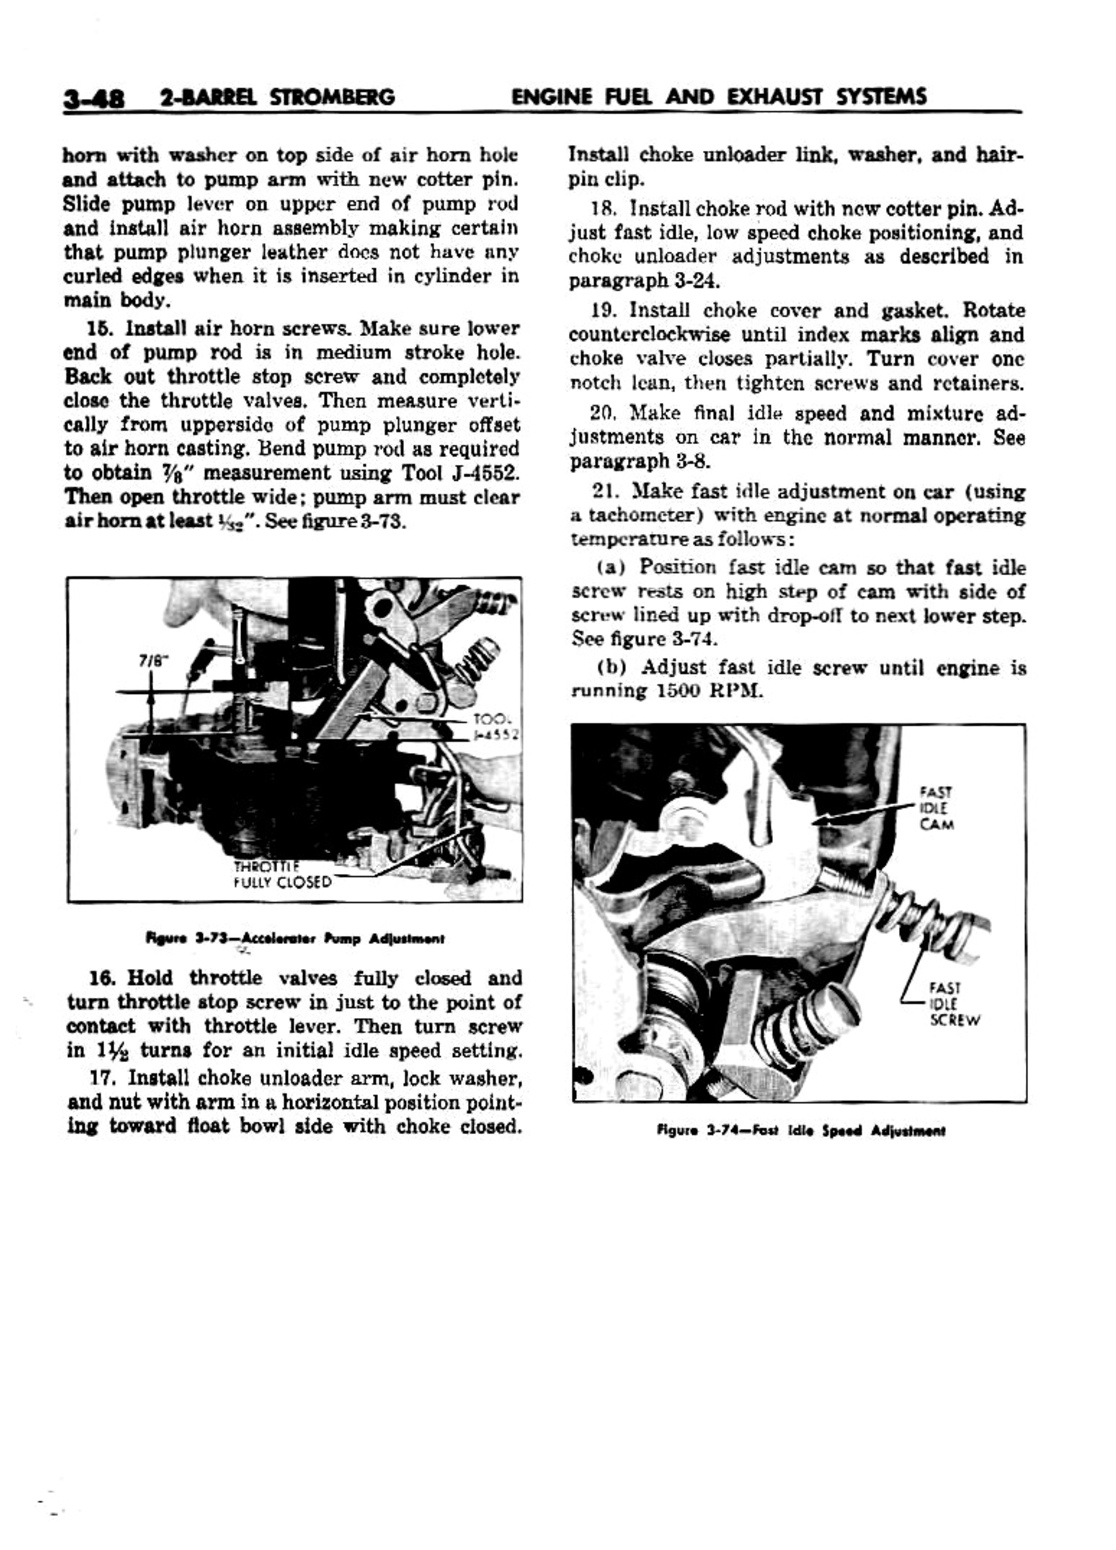 n_04 1959 Buick Shop Manual - Engine Fuel & Exhaust-048-048.jpg